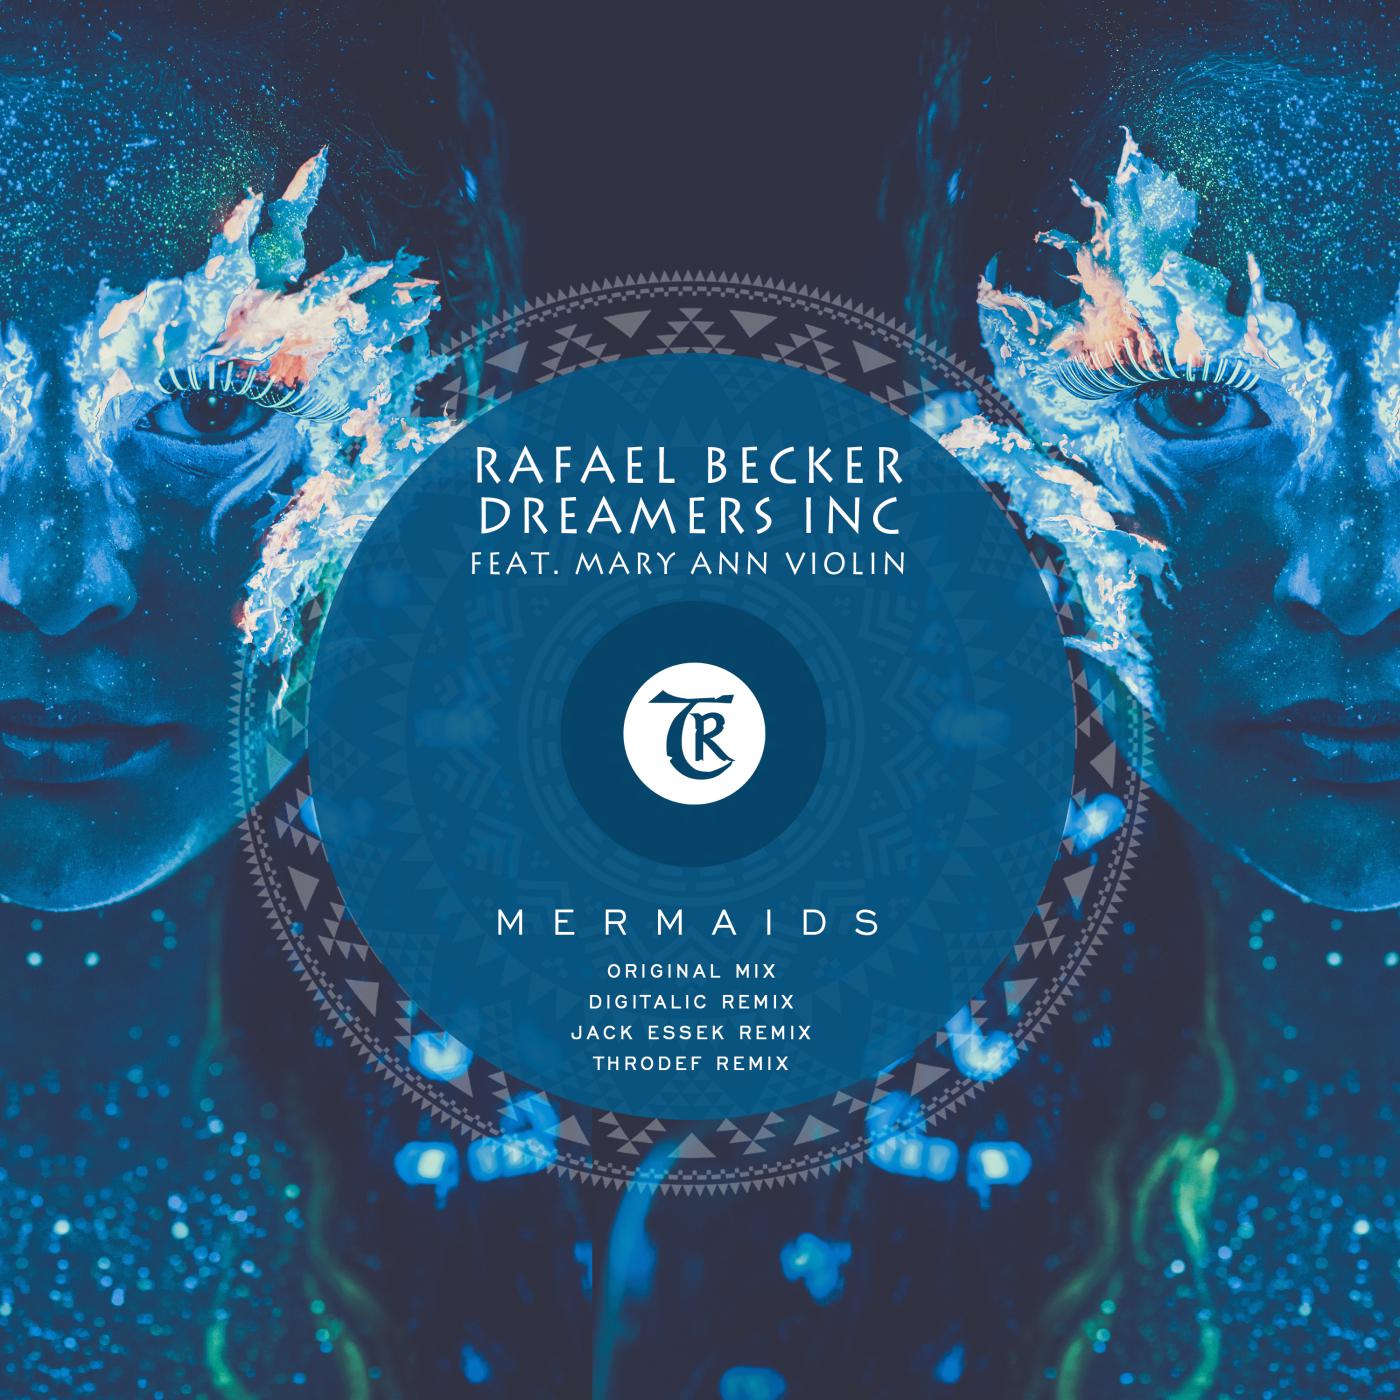 Rafael Becker - Mermaids (Digitalic Remix)